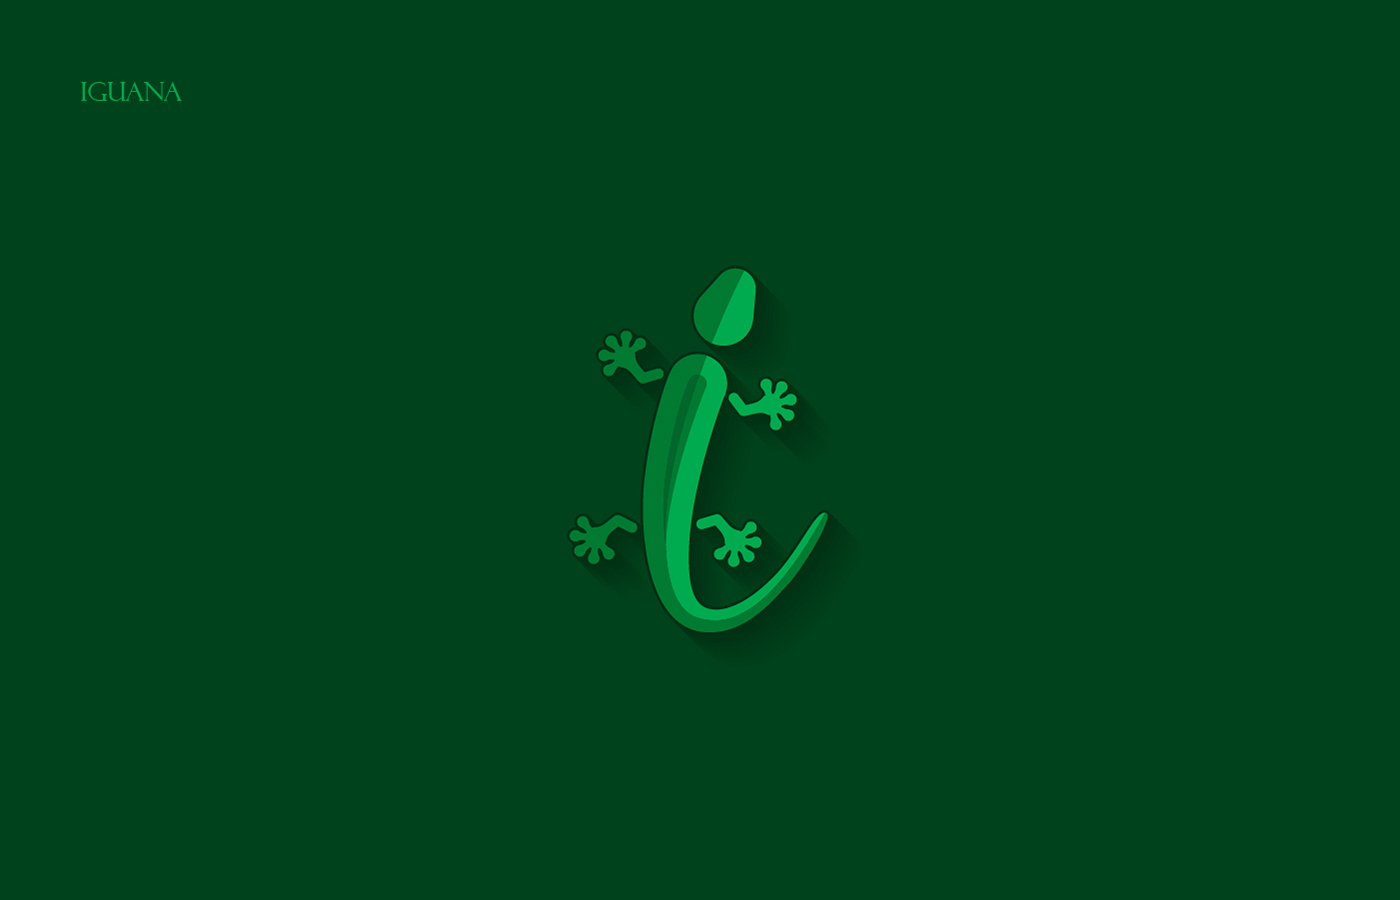 animals alphabet letters 36daysoftype logo type creative colors lettering typographic ABC instagram symbol Saudi Kuwait